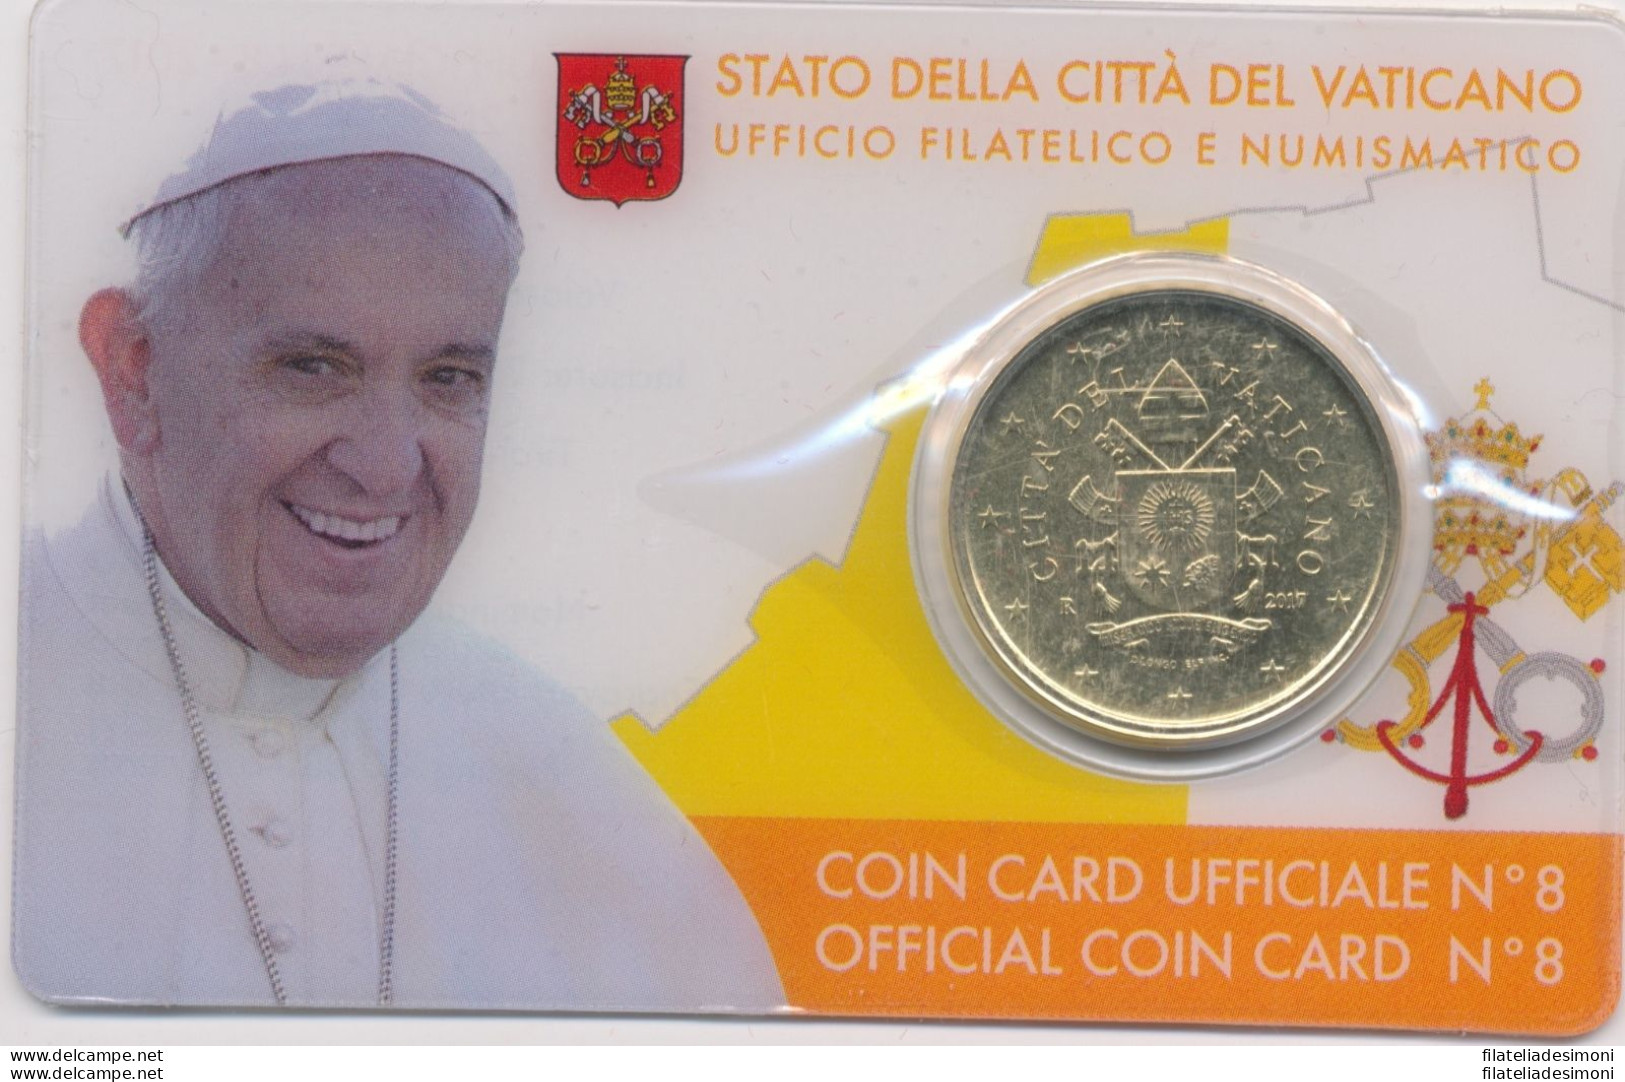 2017 Vaticano -  Coin Card  N. 8  50 Cent - Vaticano (Ciudad Del)